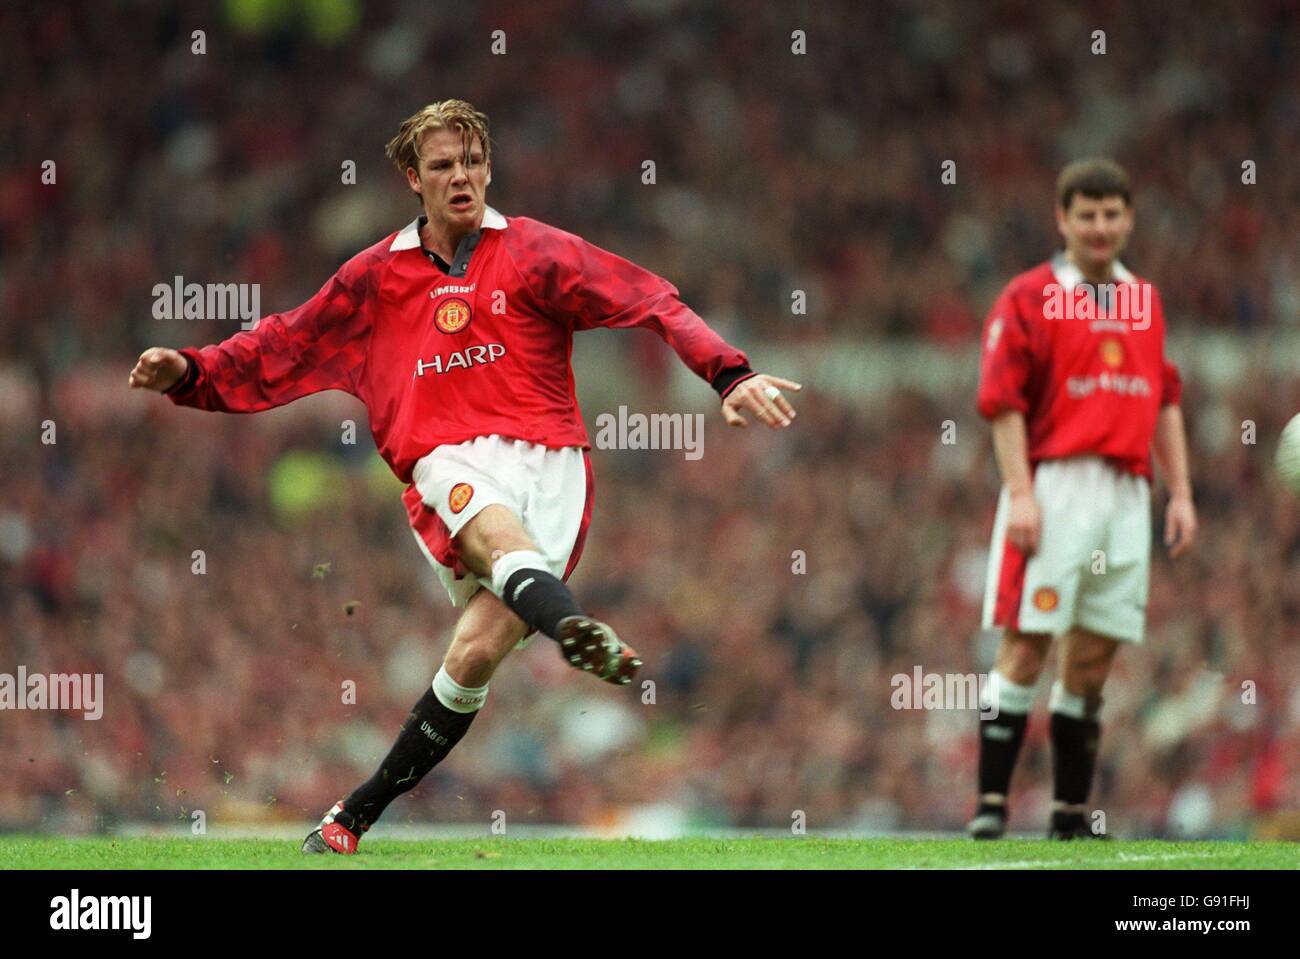 Soccer - FA Carling Premiership - Manchester United v Wimbledon. Manchester United's David Beckham takes a free kick. Stock Photo